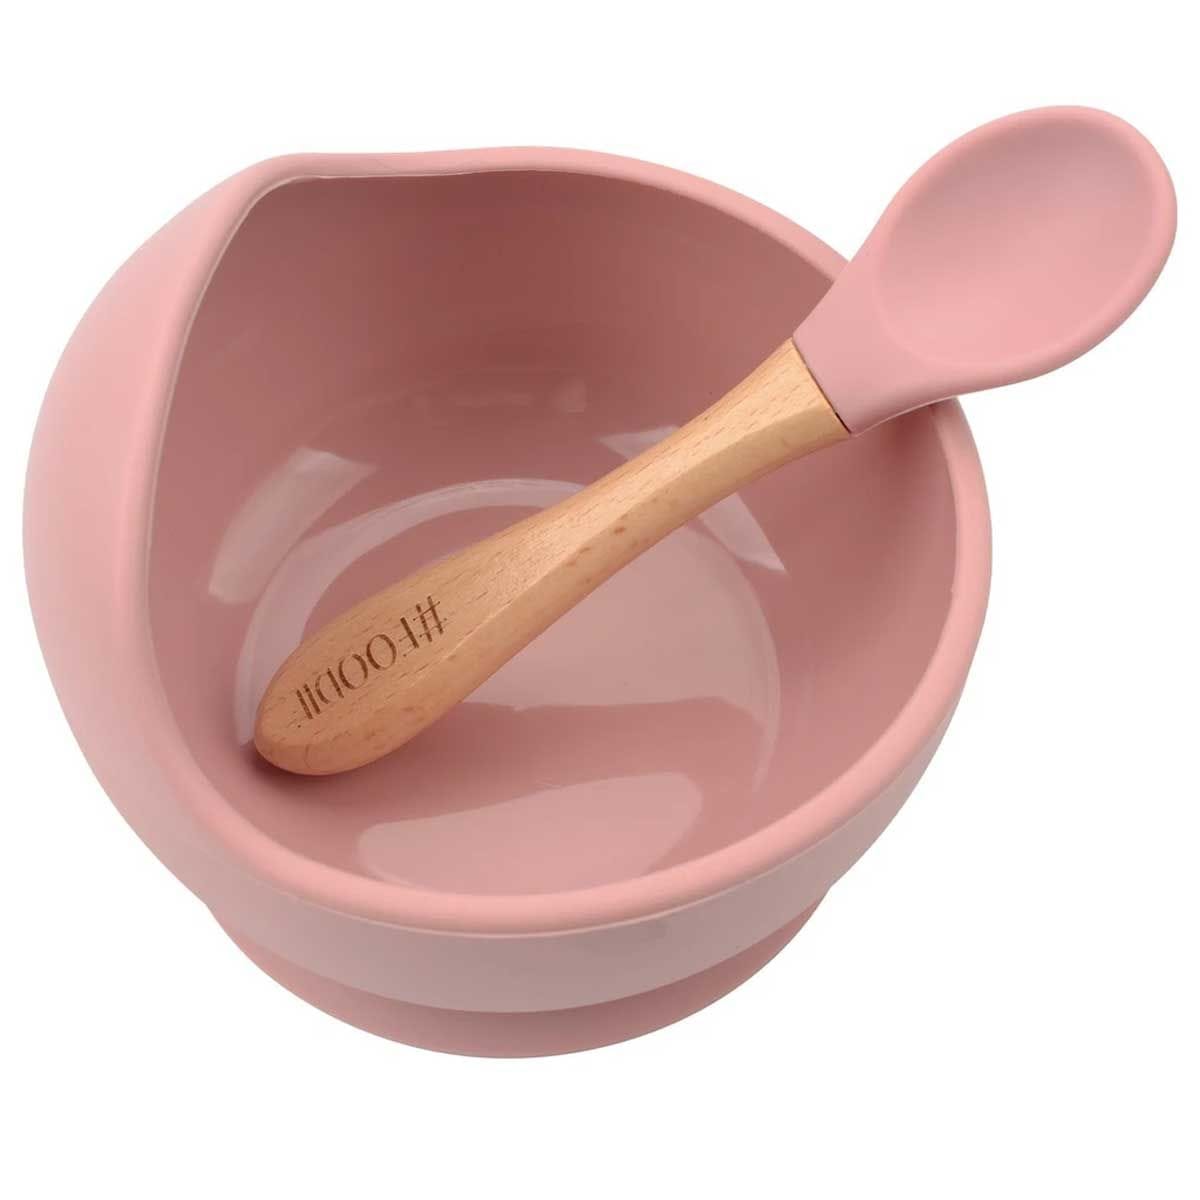 Glitter & Spice silicone bowl set Glitter & Spice Silicone Bowl & Spoon Set - Dusty Rose